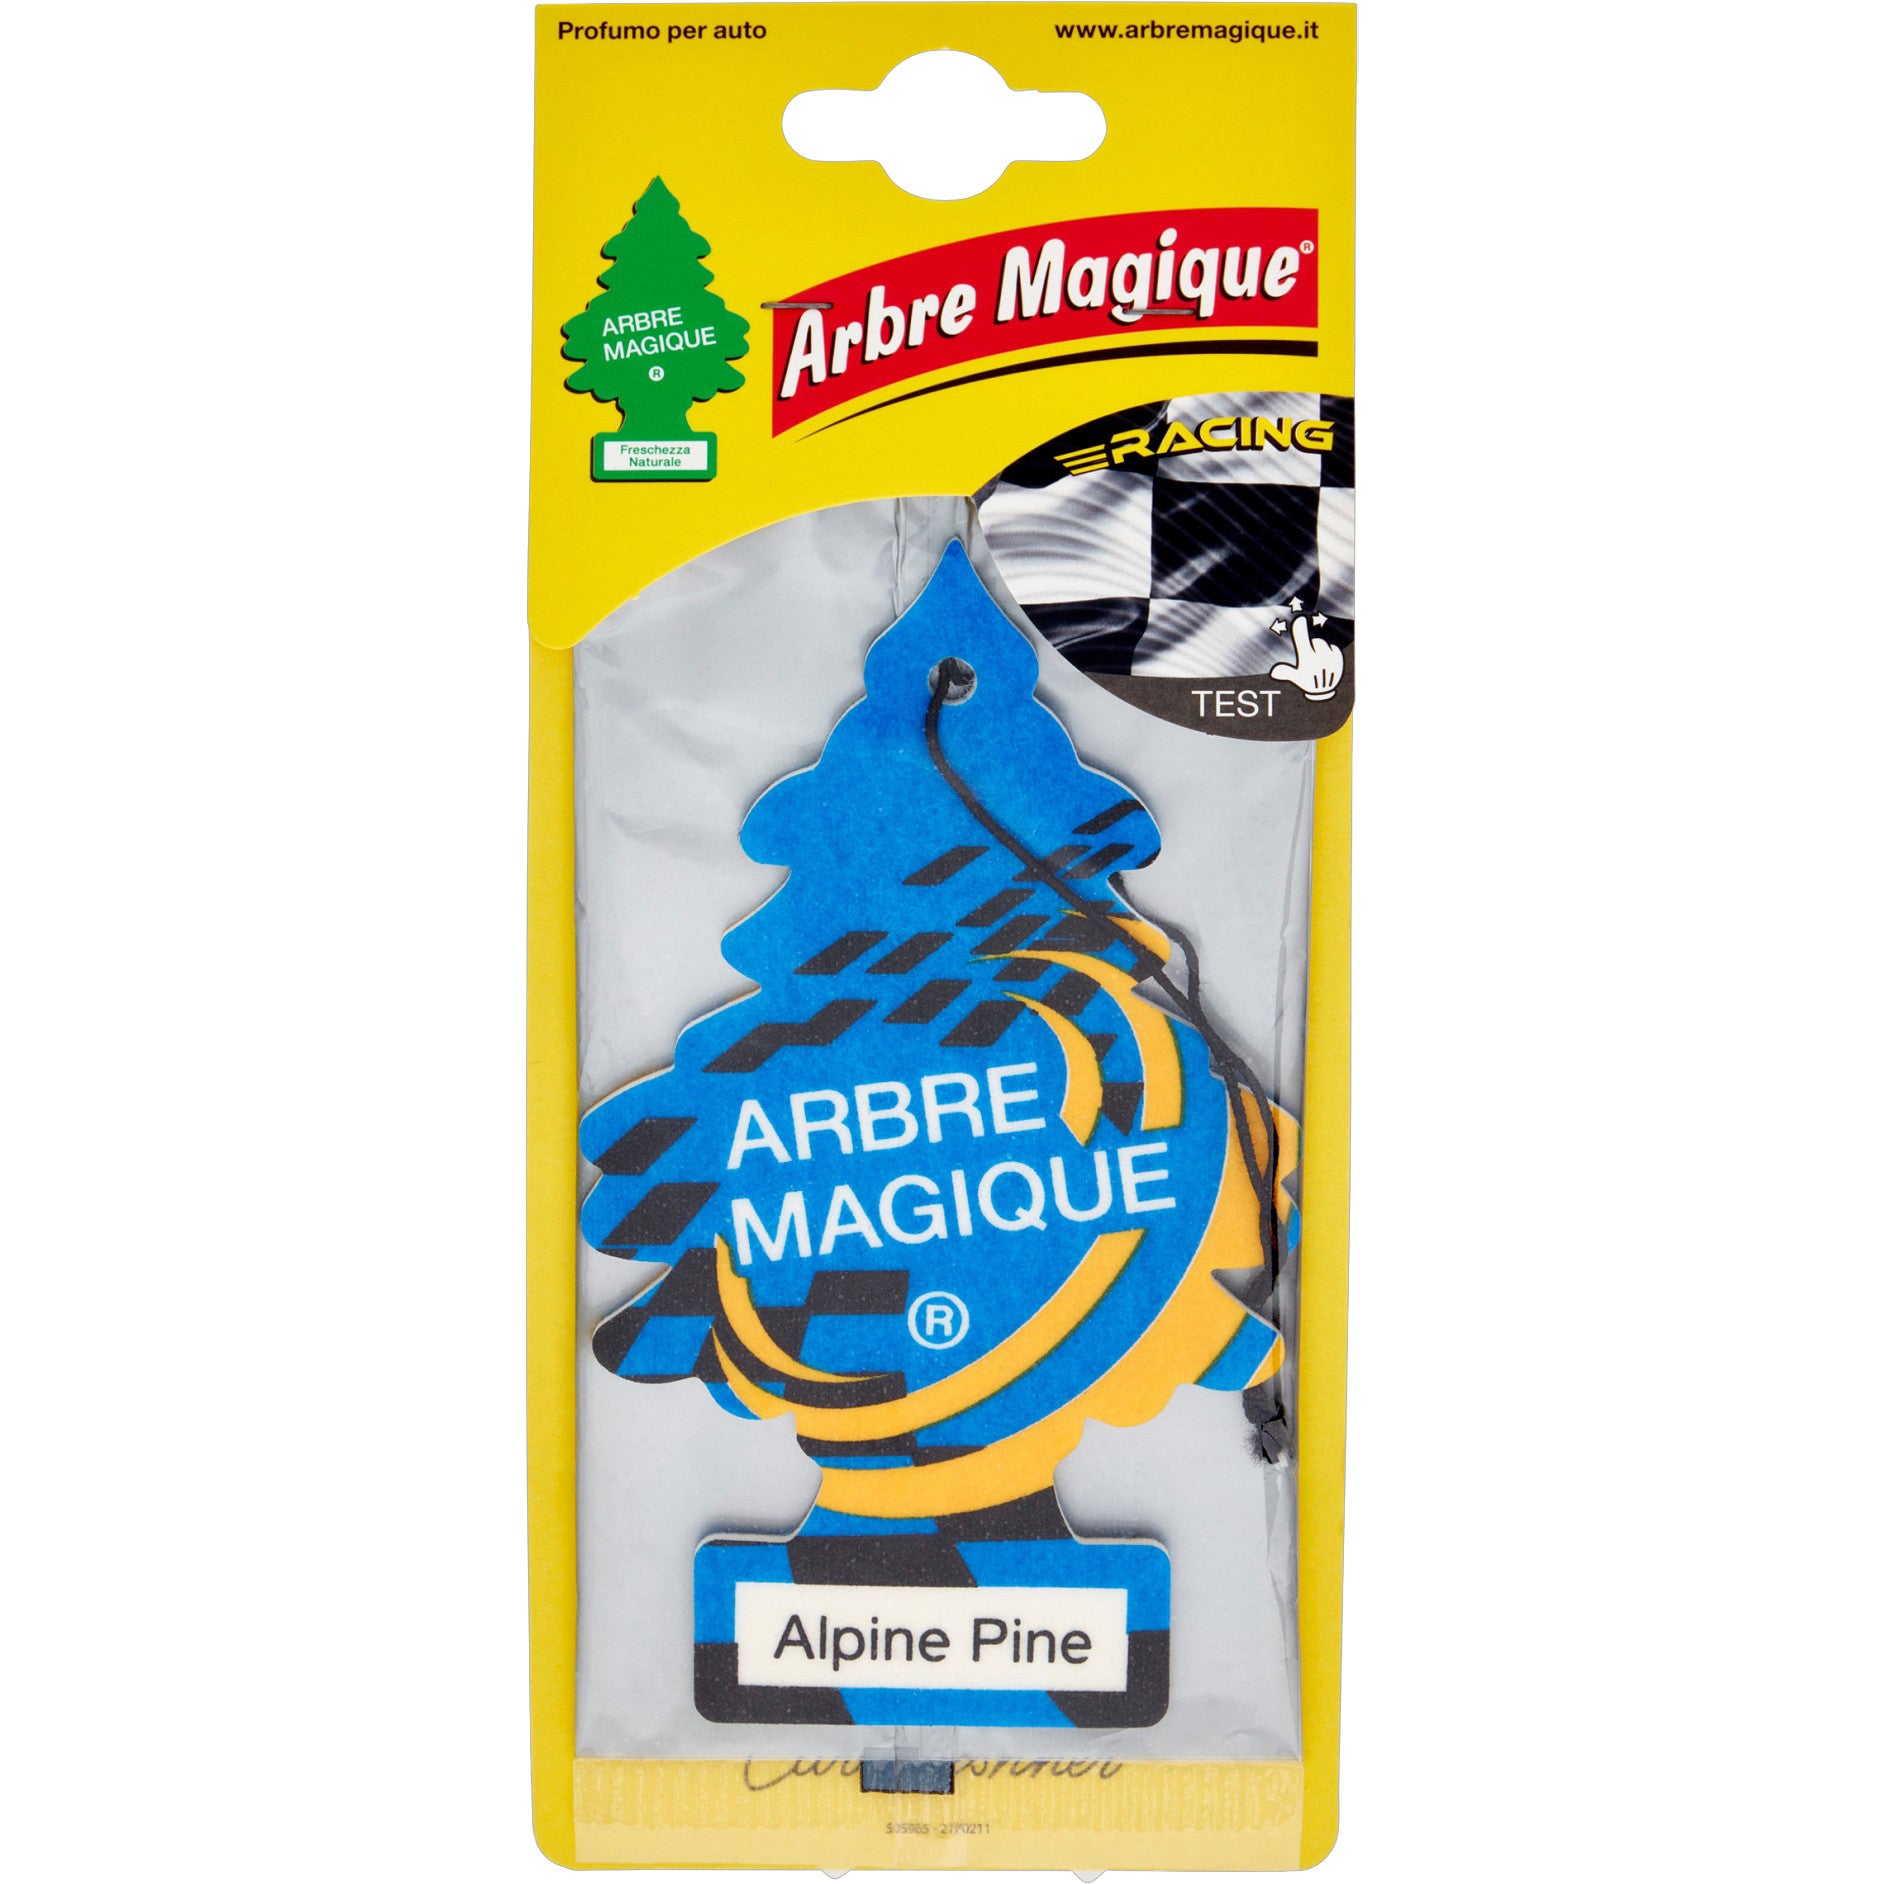 Arbre magique alpine pine